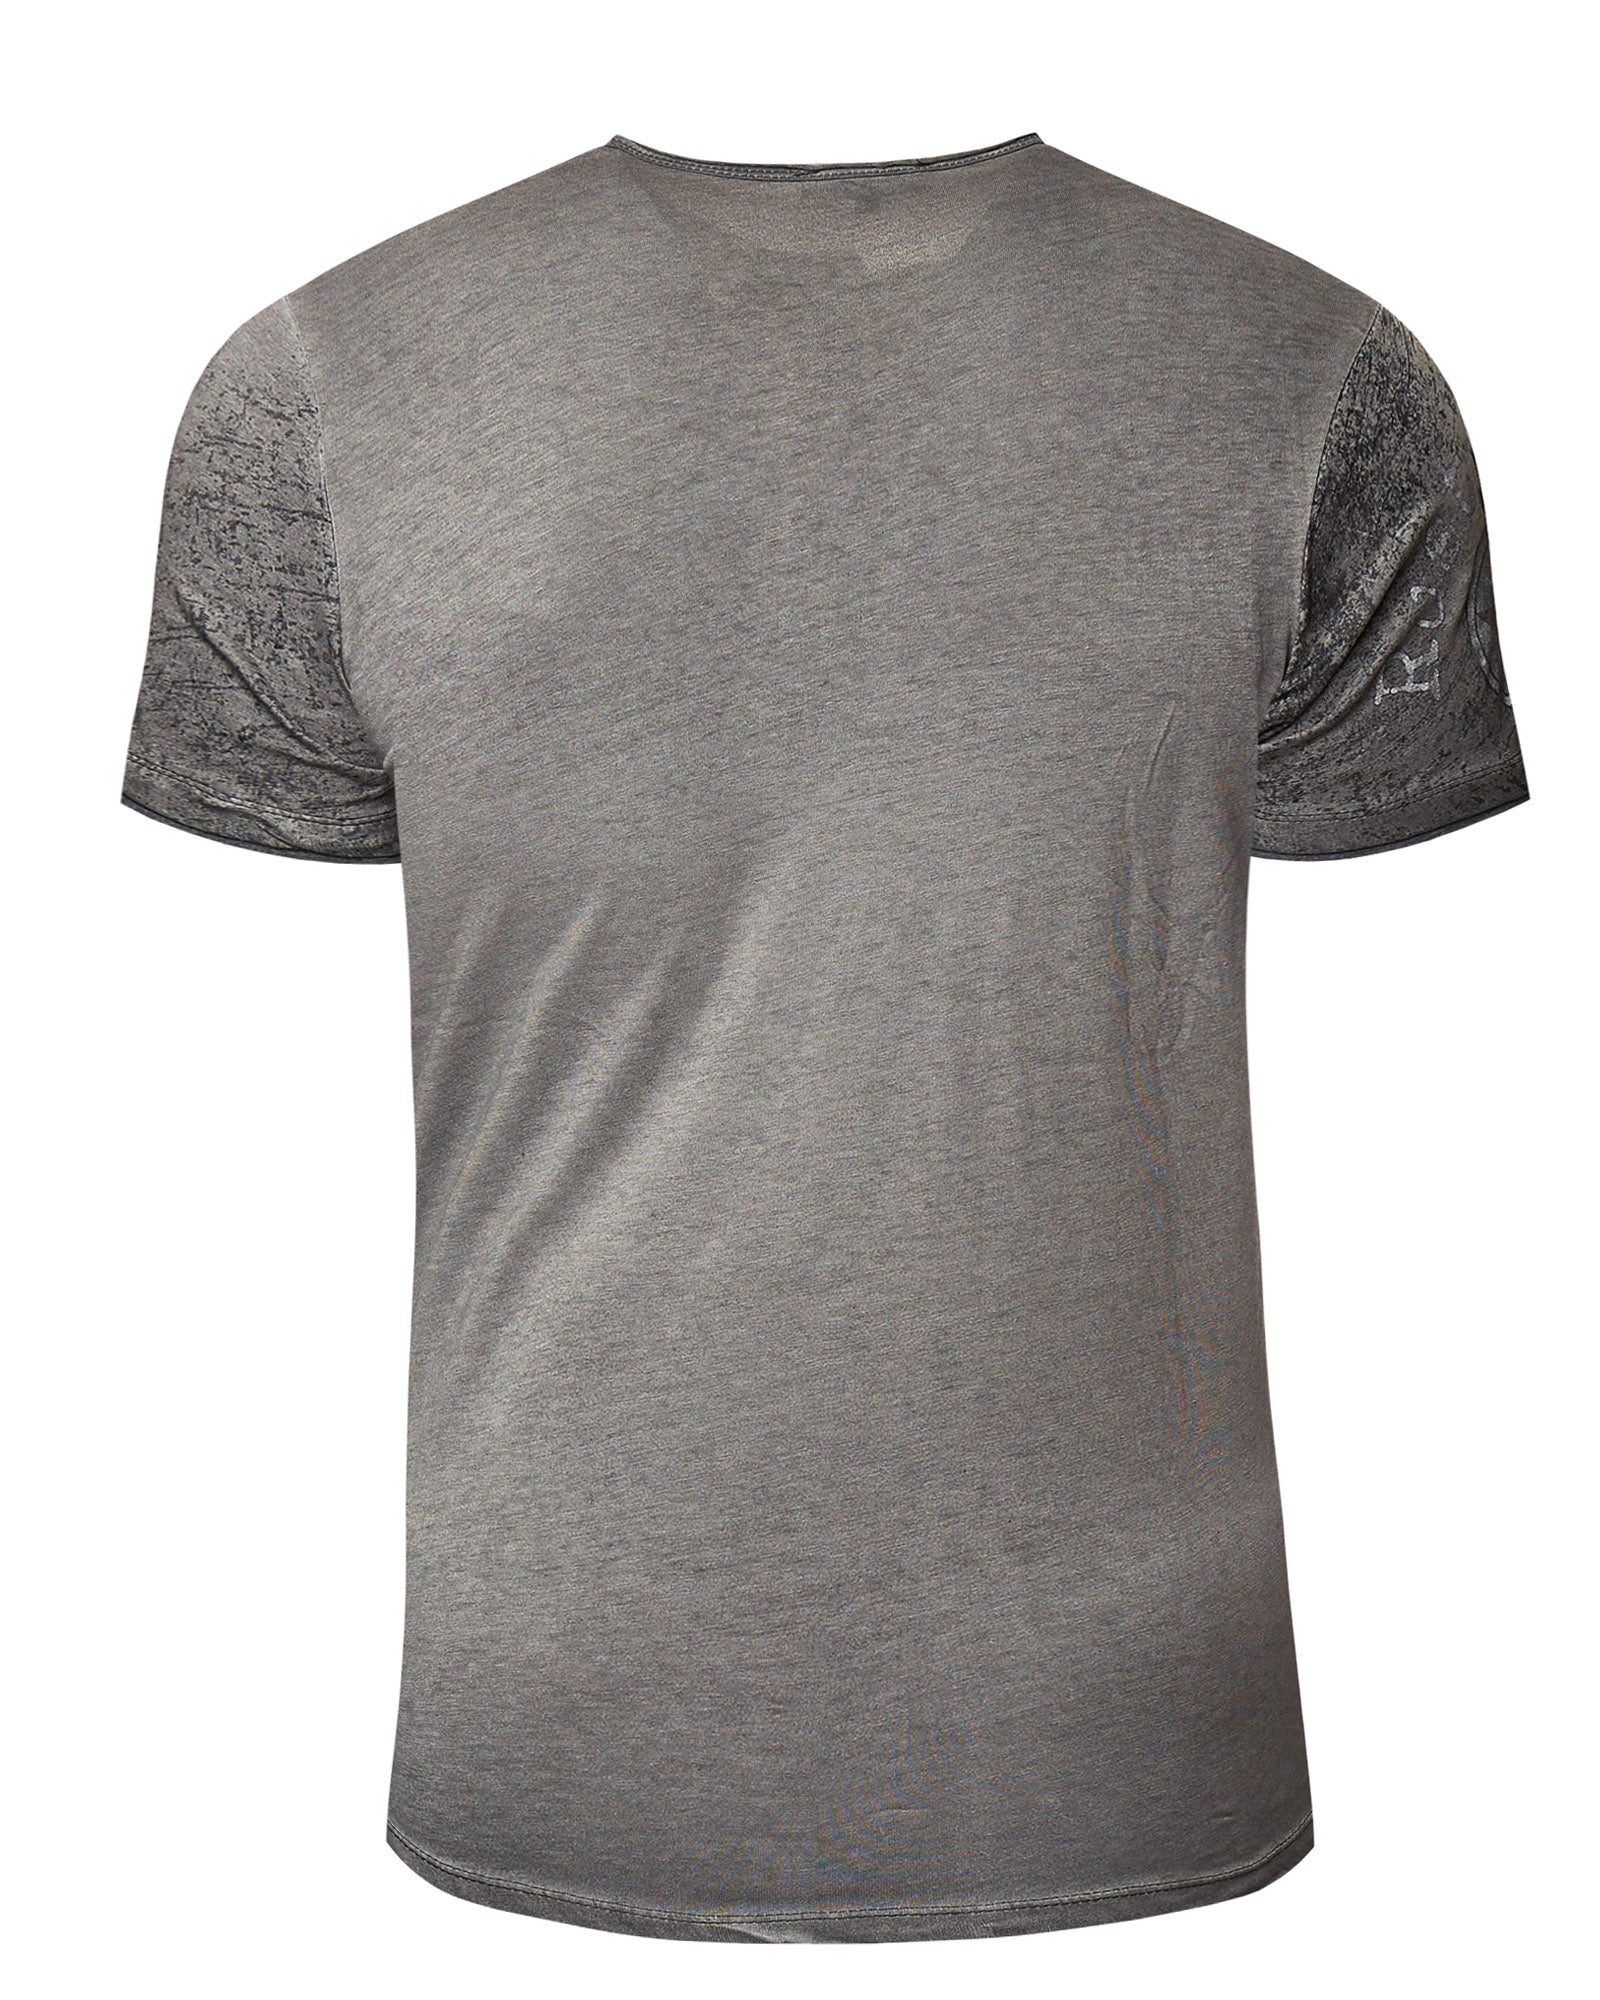 Parts t-shirt - Dark grey